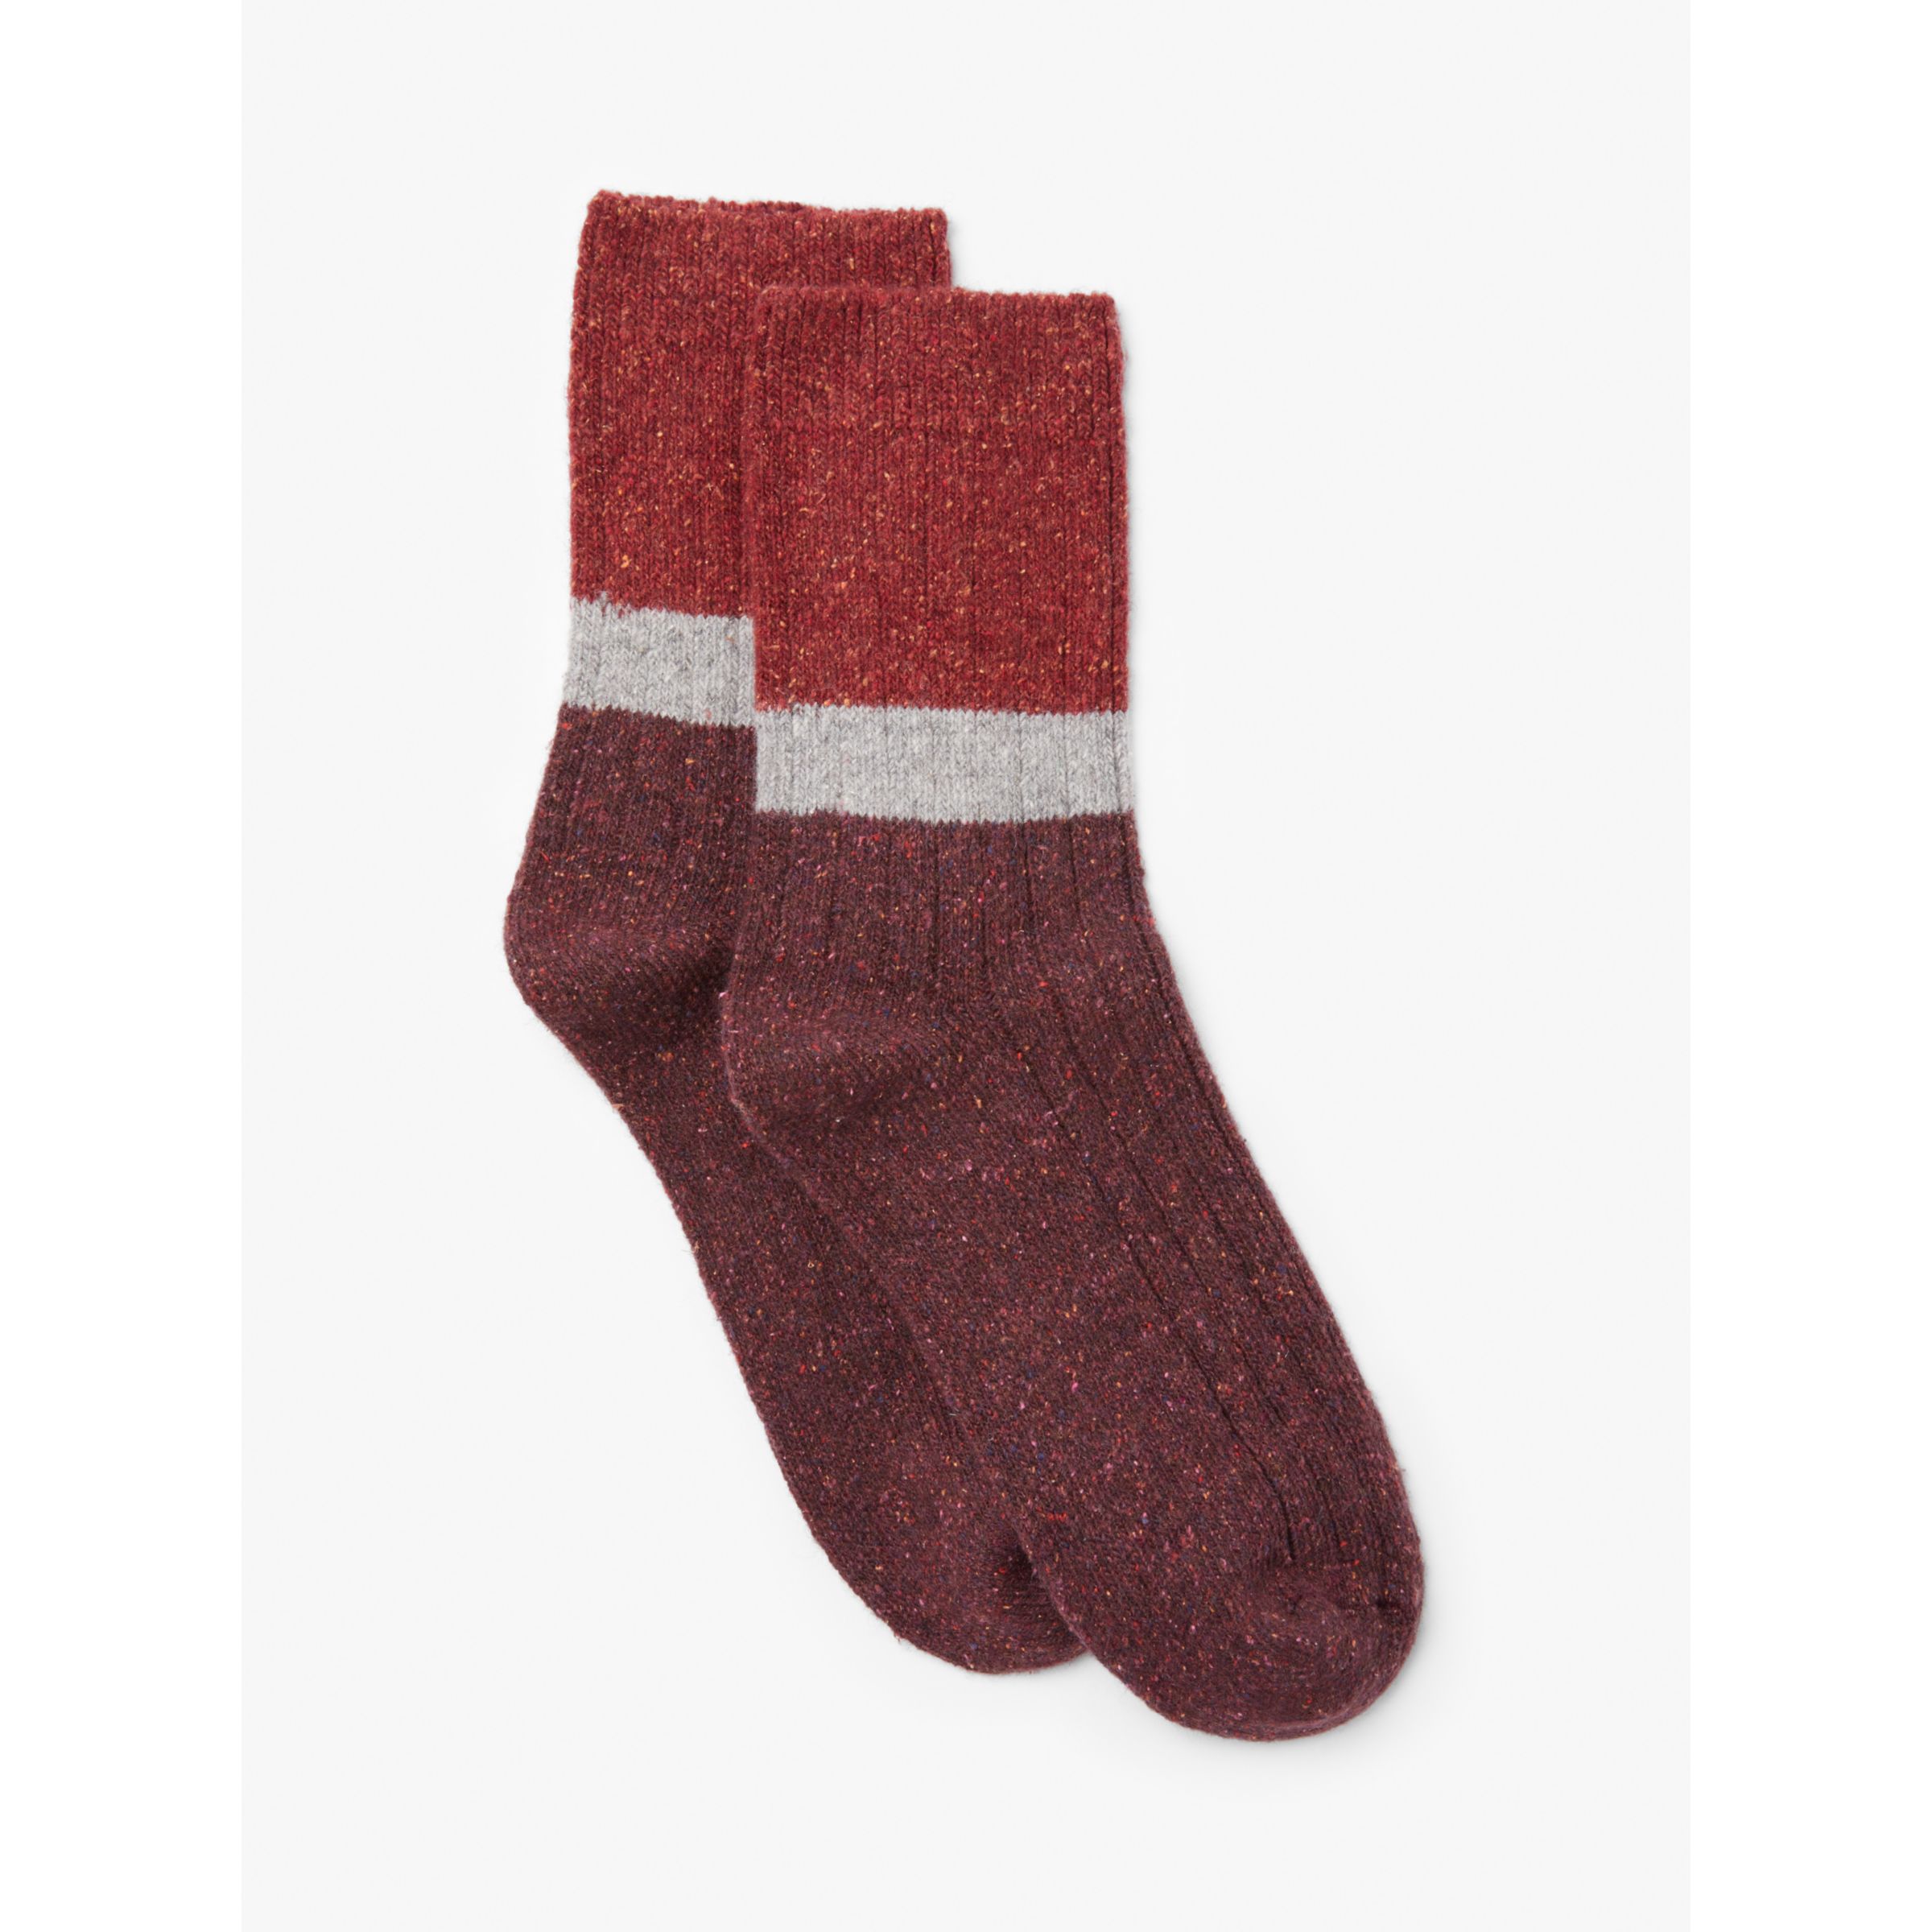 John Lewis & Partners Women's Wool and Silk Mix Colour Block Ankle Socks, Burgundy/Grey